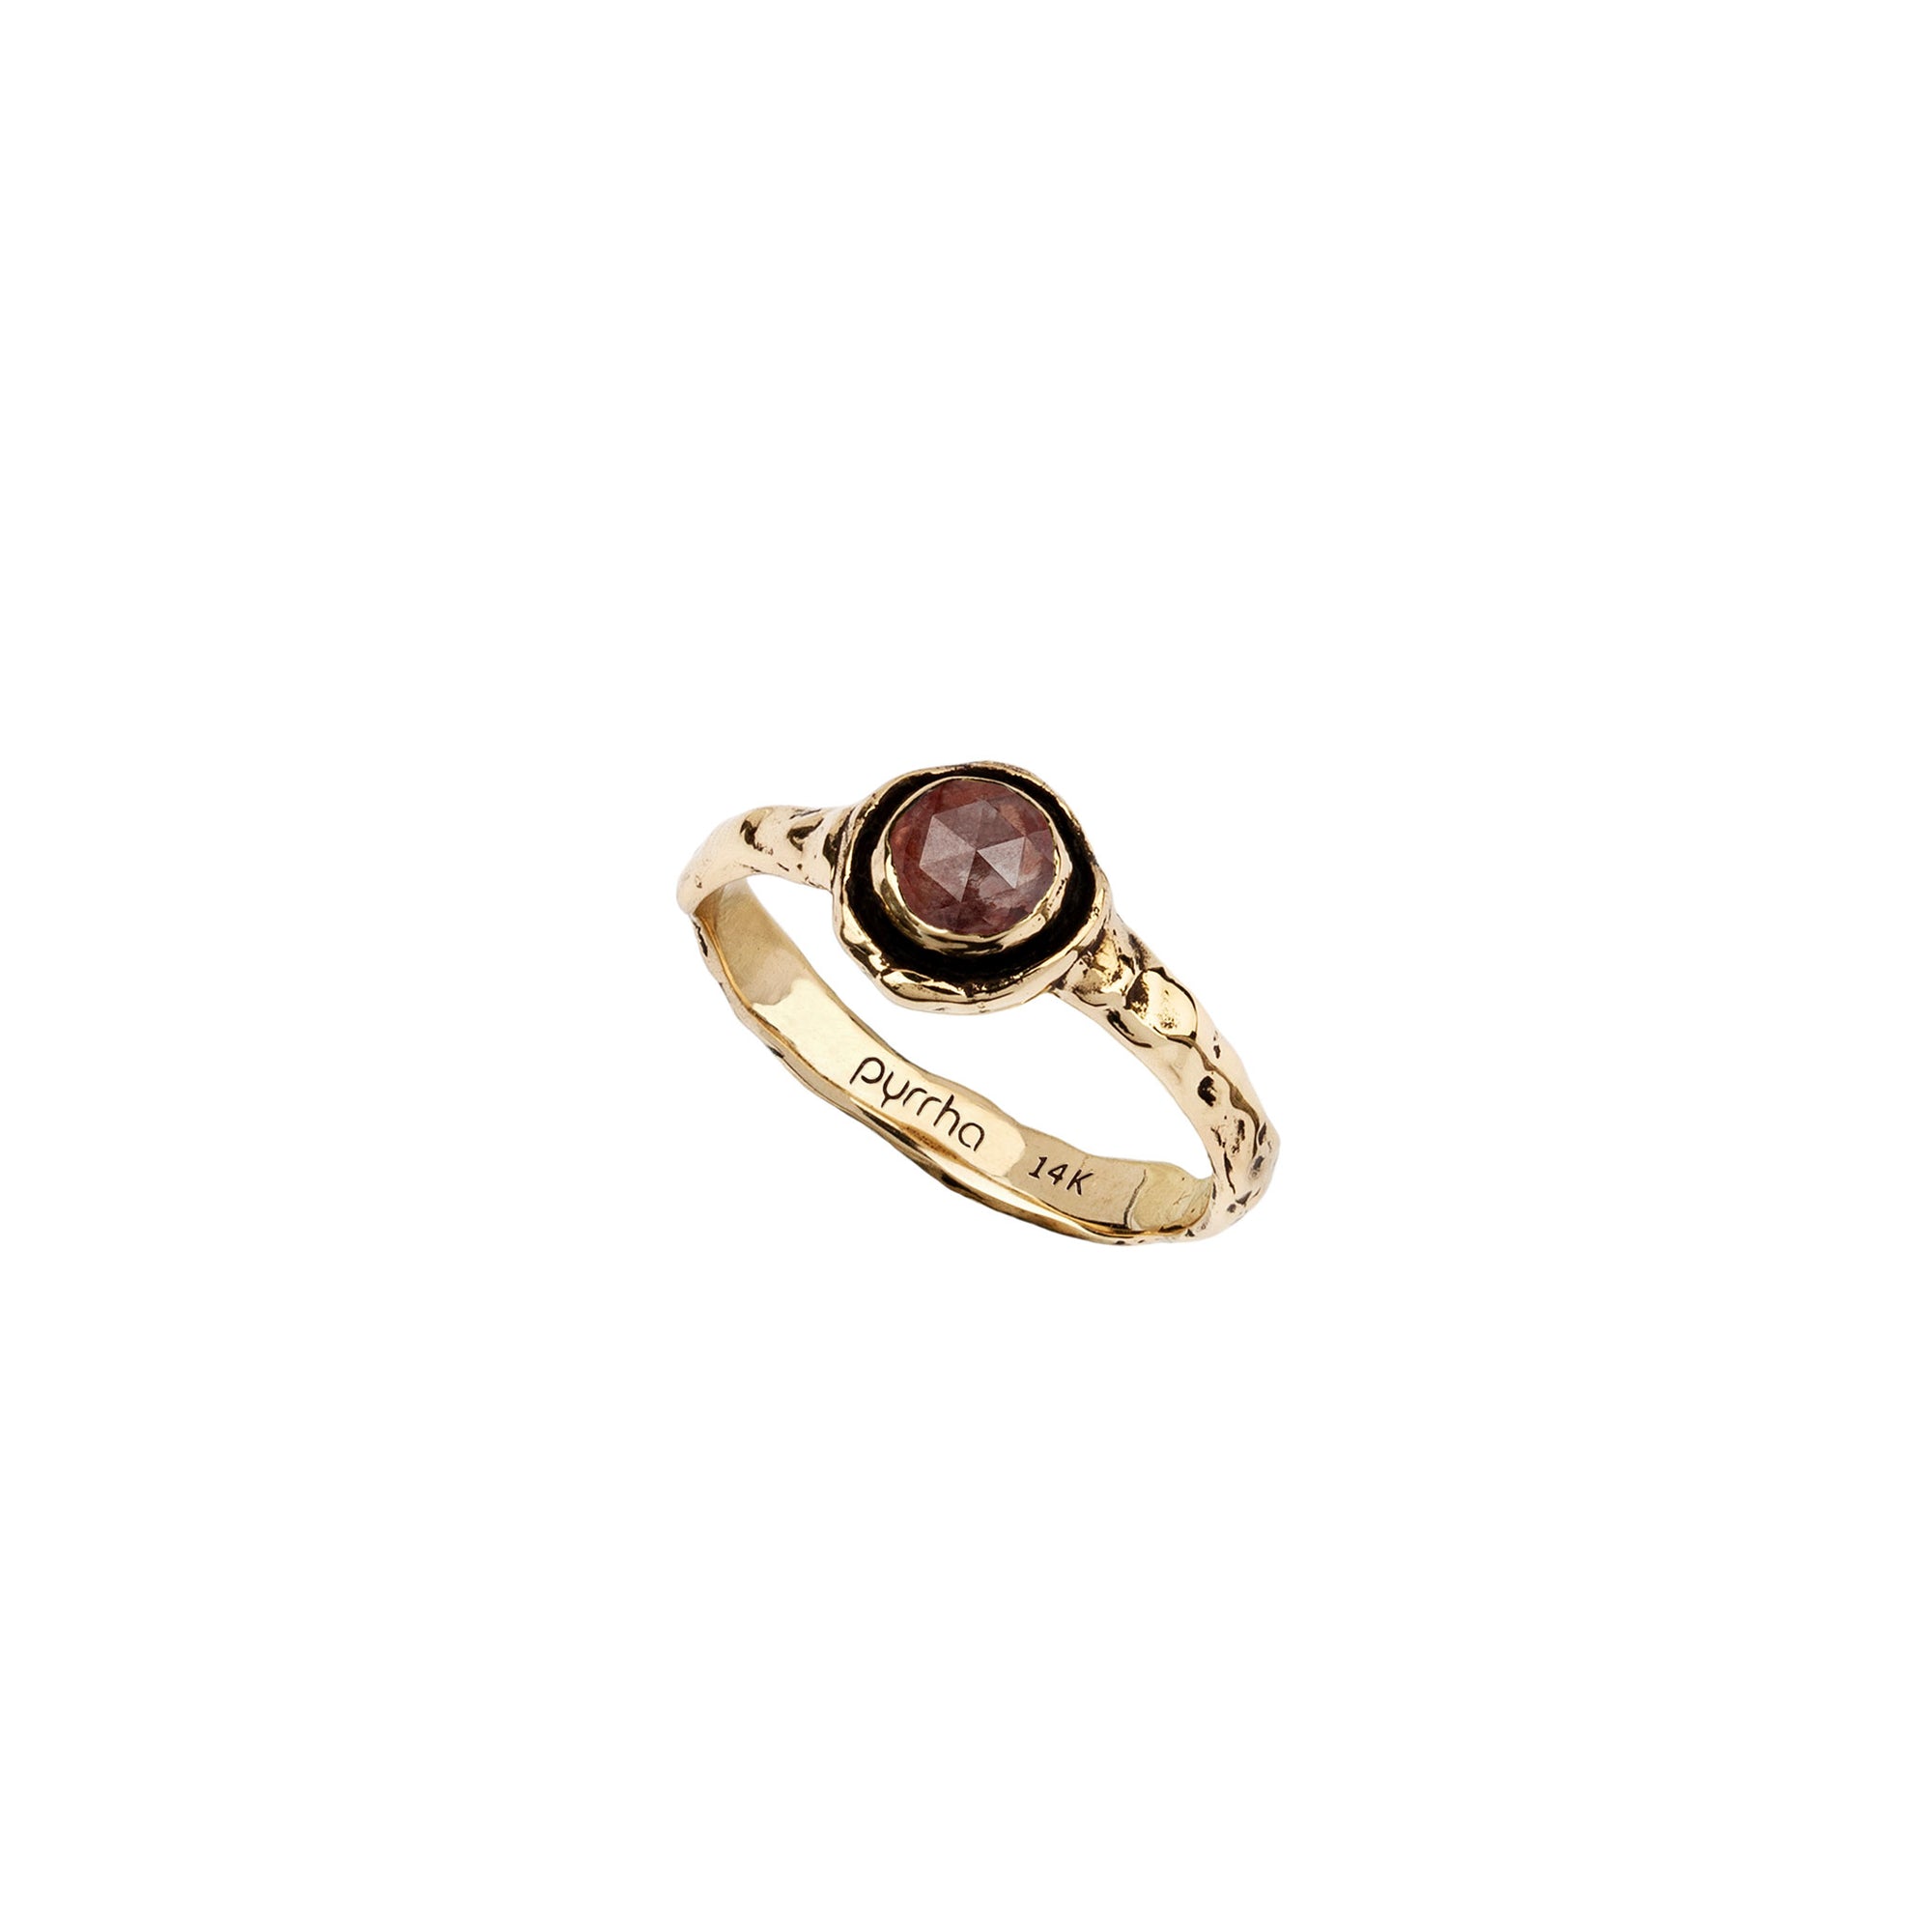 A narrow 14k gold ring set with a cognac diamond.